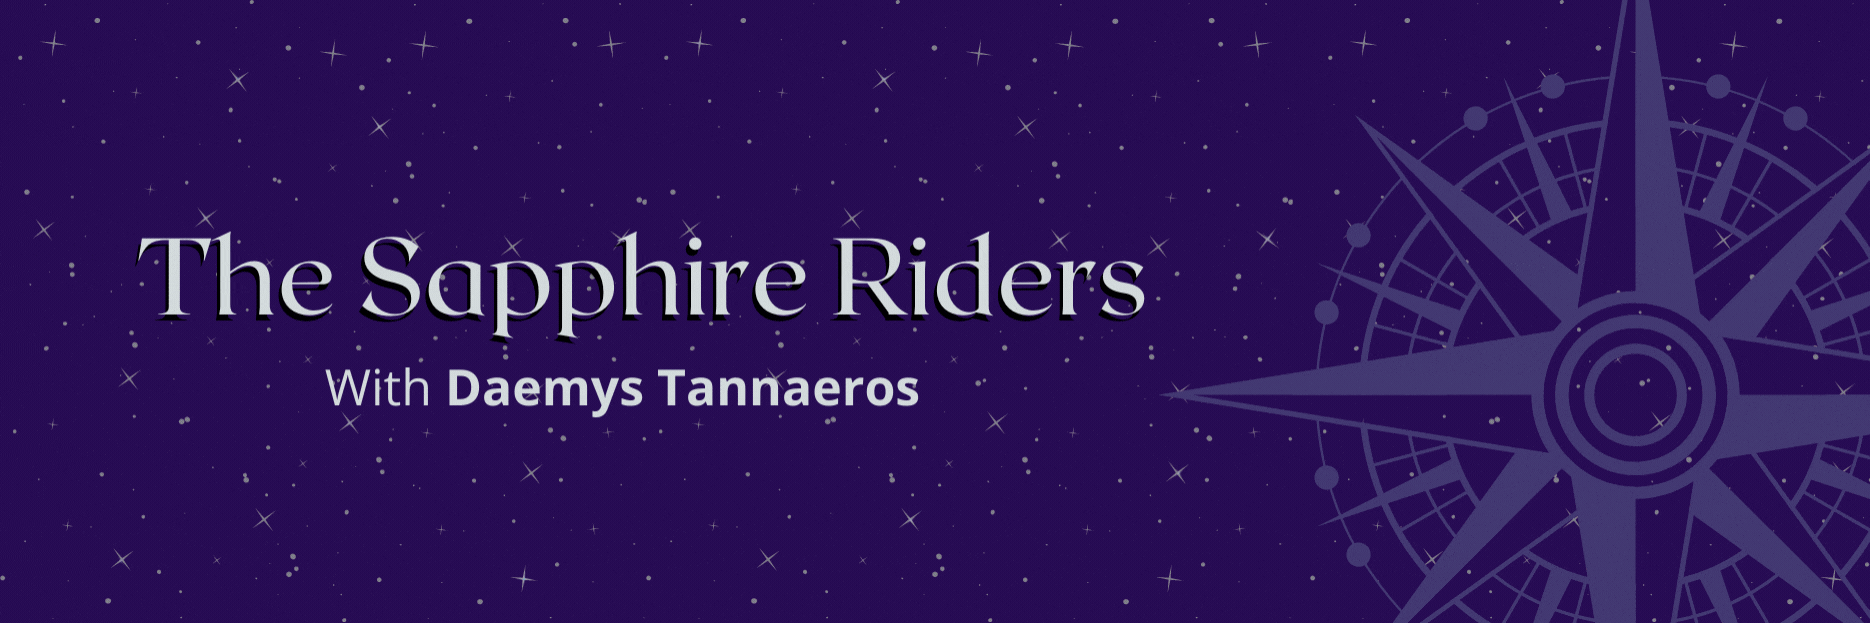 The Sapphire Riders #1